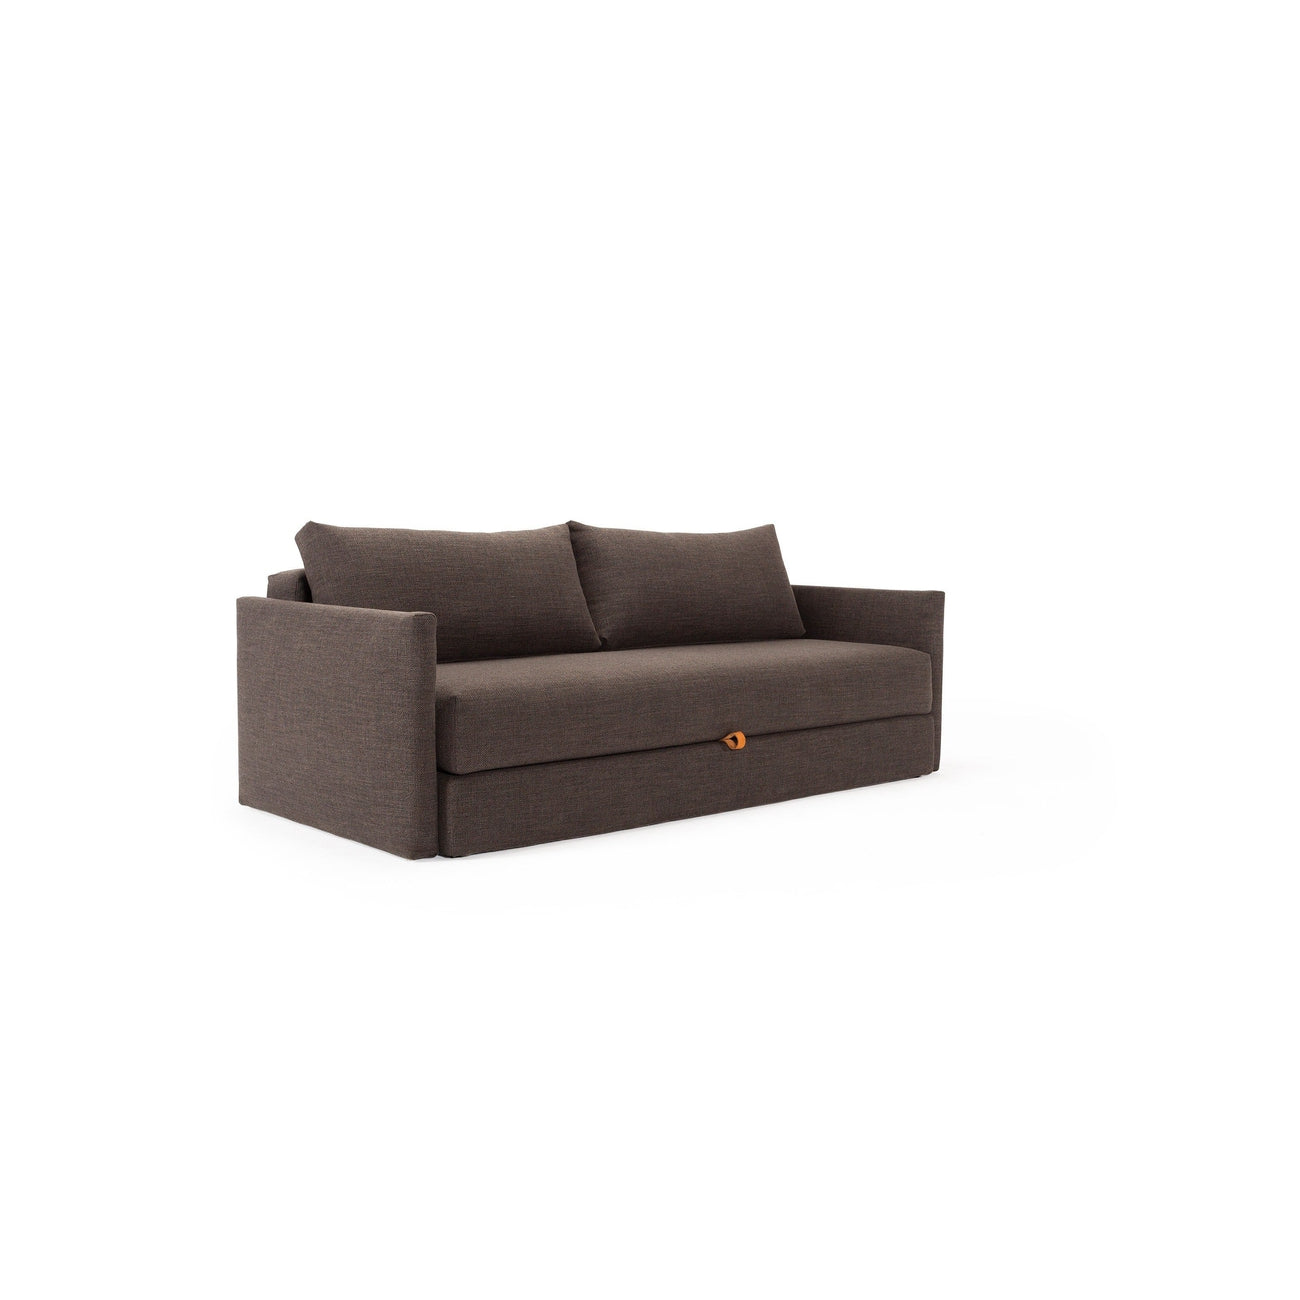 Tripi sleep sofa black legs-Innovation Living-INNO-94-543085578-03-2-Sofas-1-France and Son